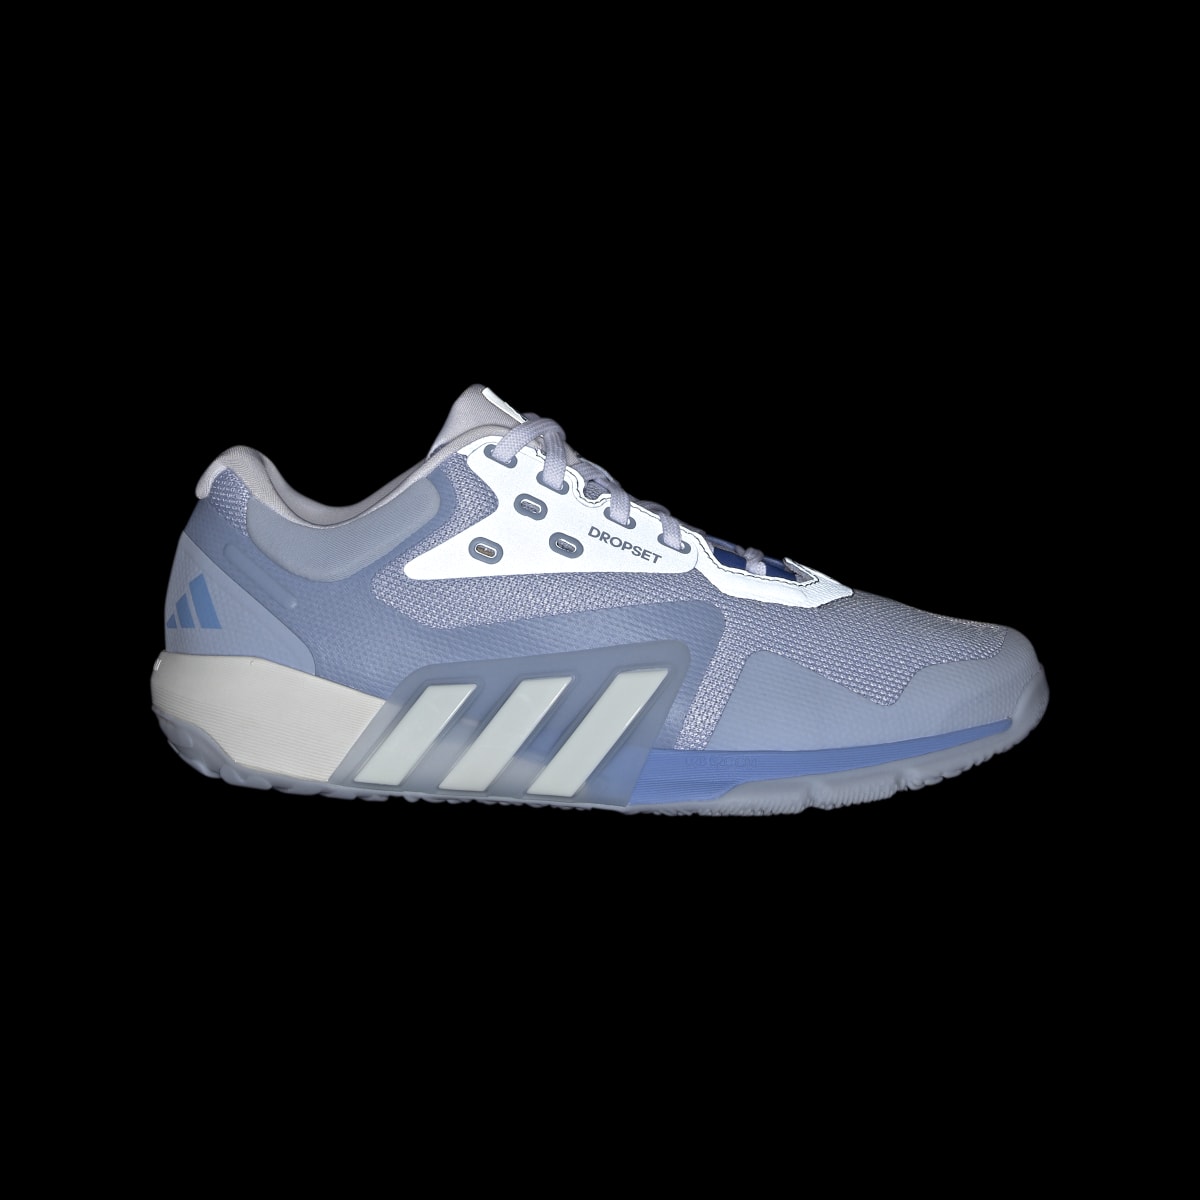 Adidas Dropset Trainer Schuh. 5